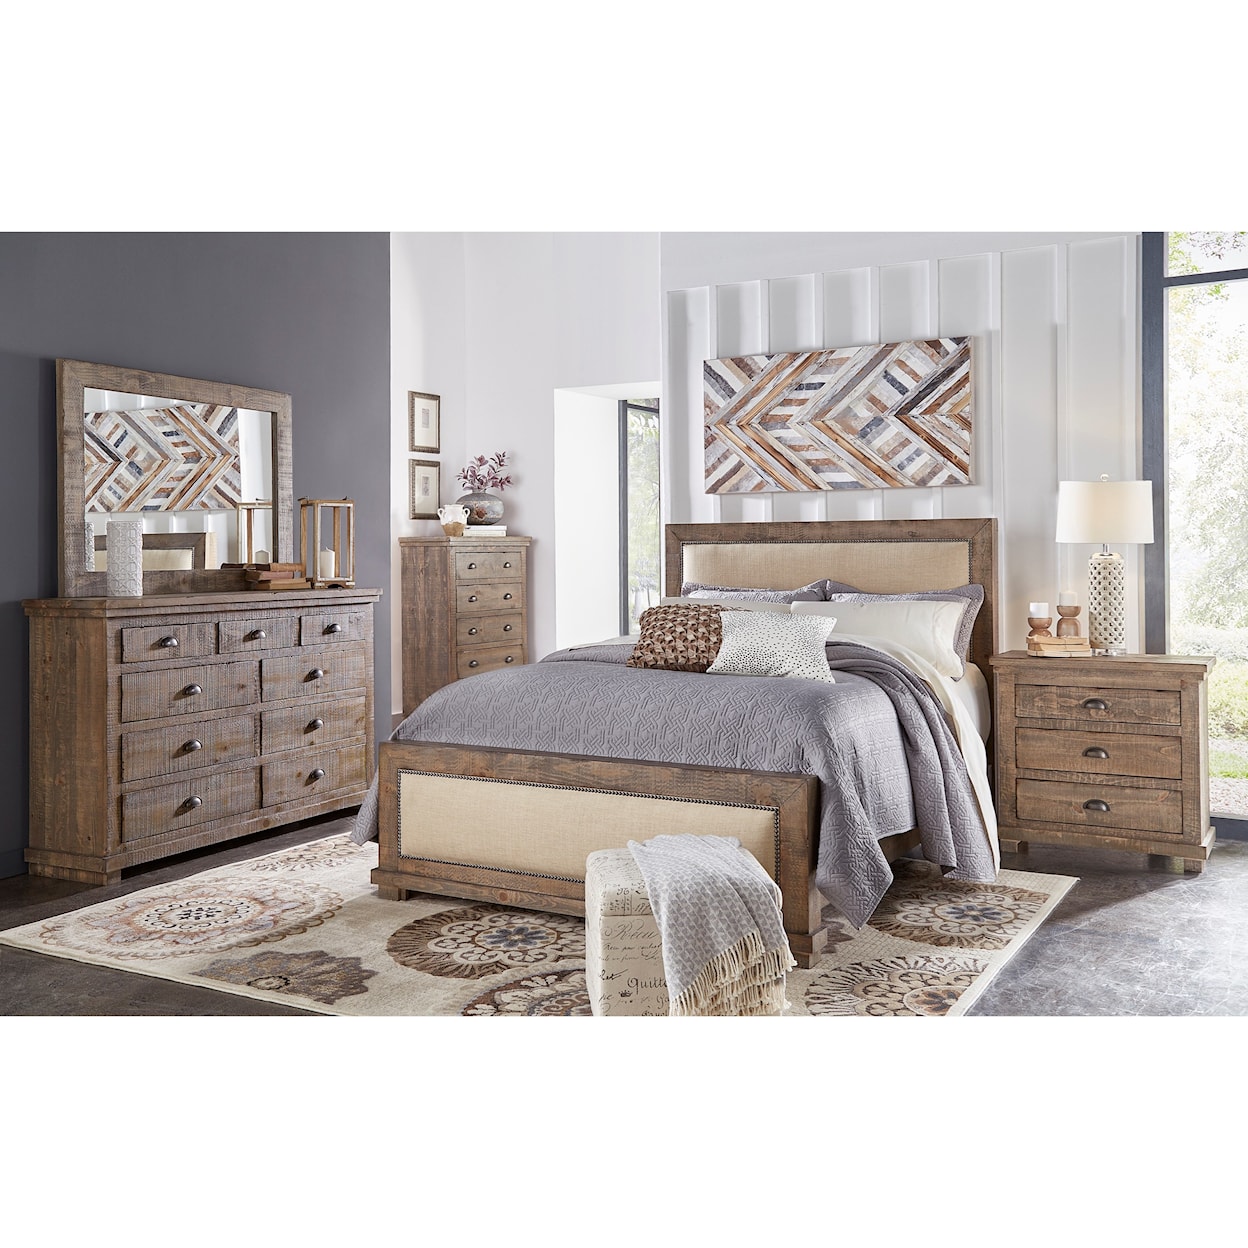 Progressive Furniture Willow California King Bedroom Group